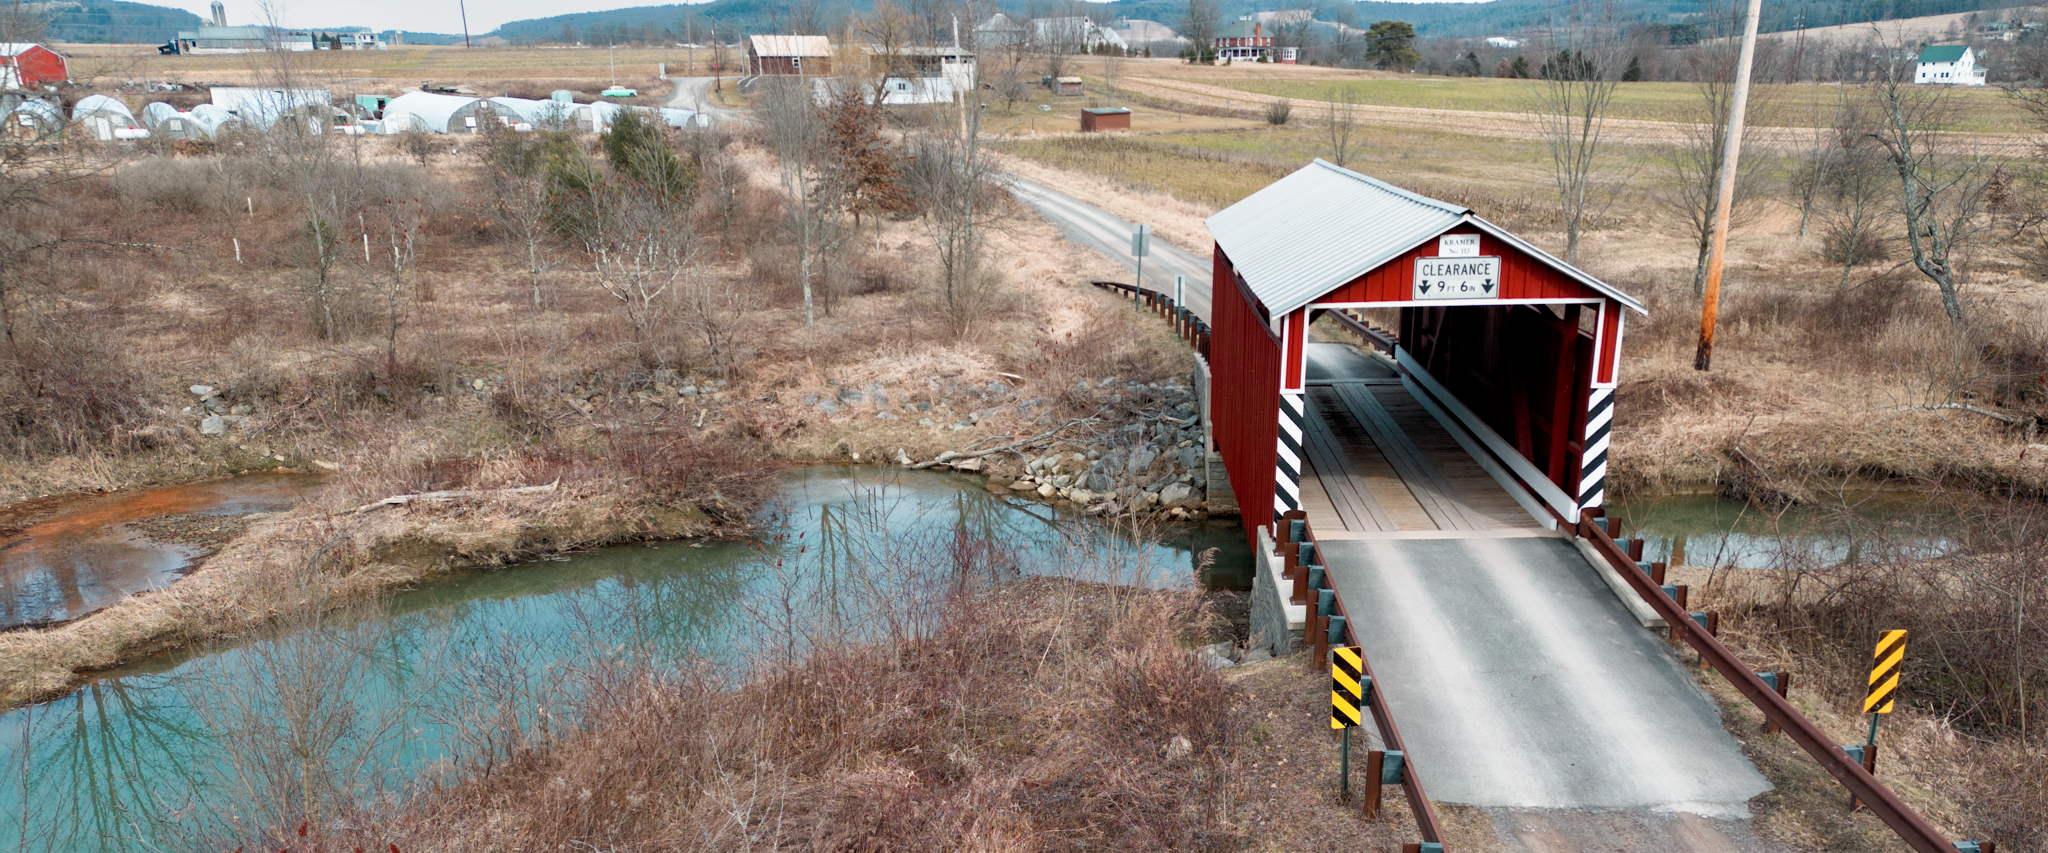 Kramer Covered Bridge, Columbia County, PA